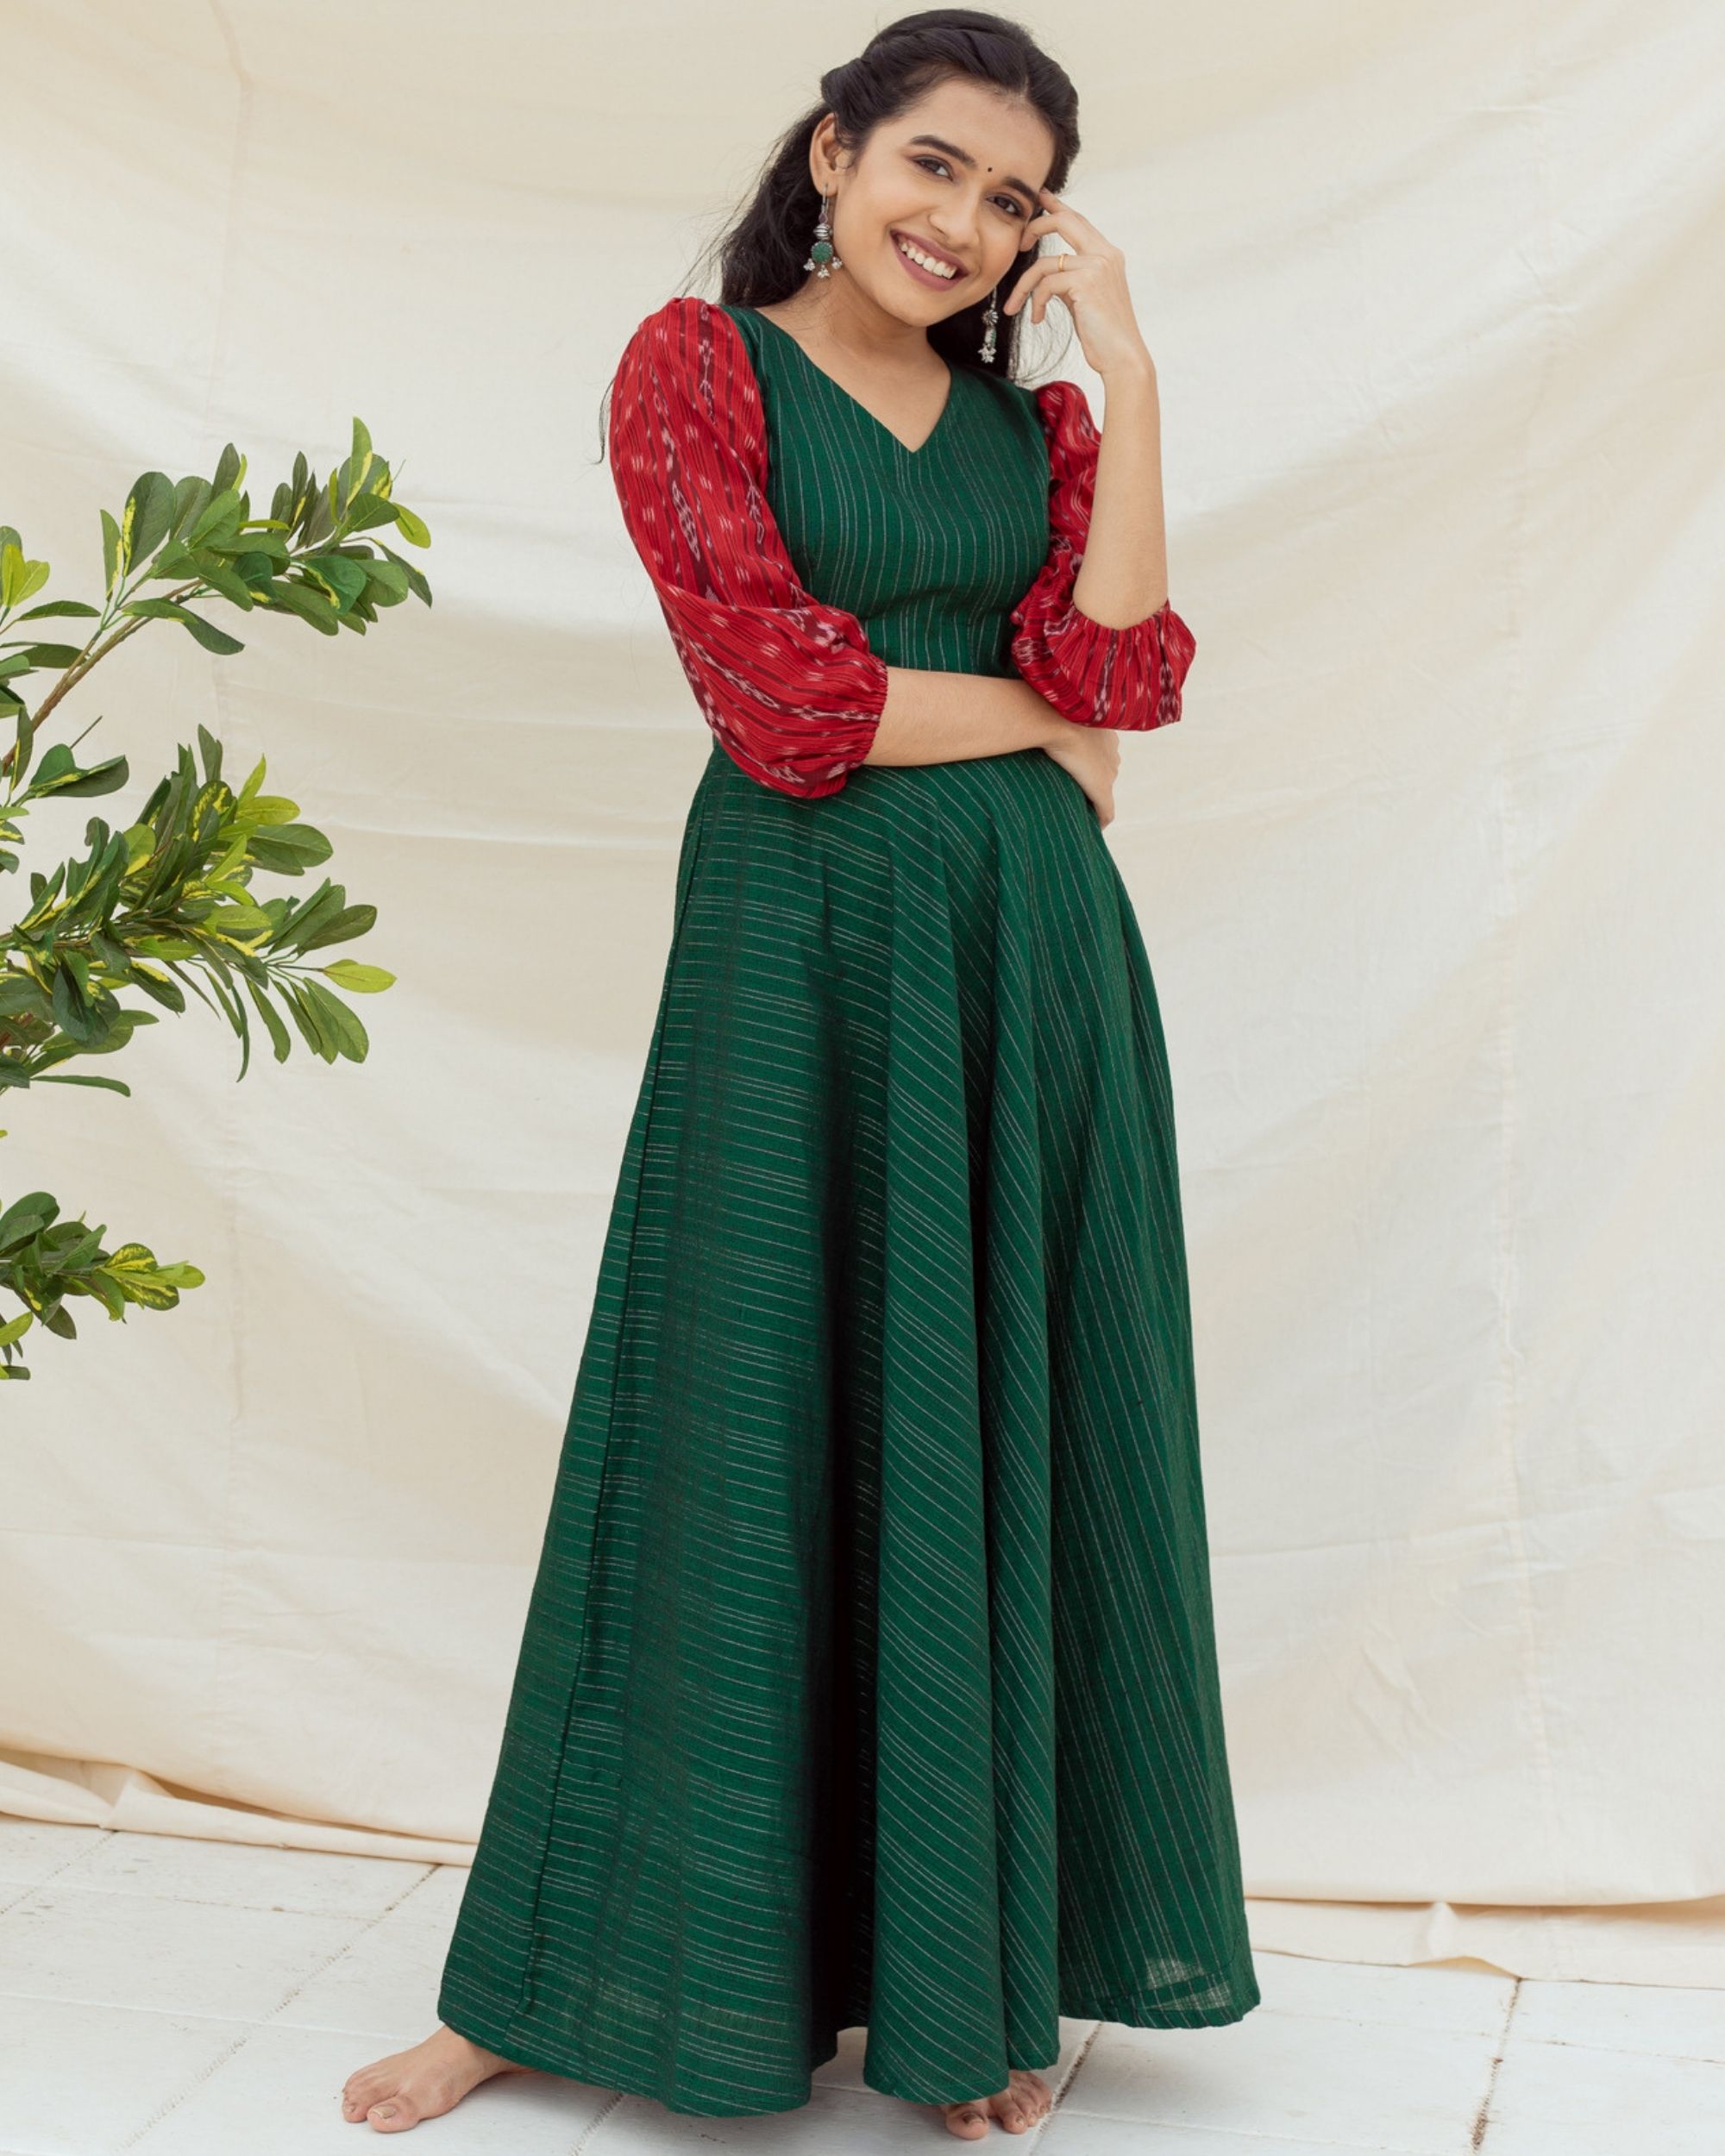 Bottle green handloom dress with red sambalpuri ikat sleeves